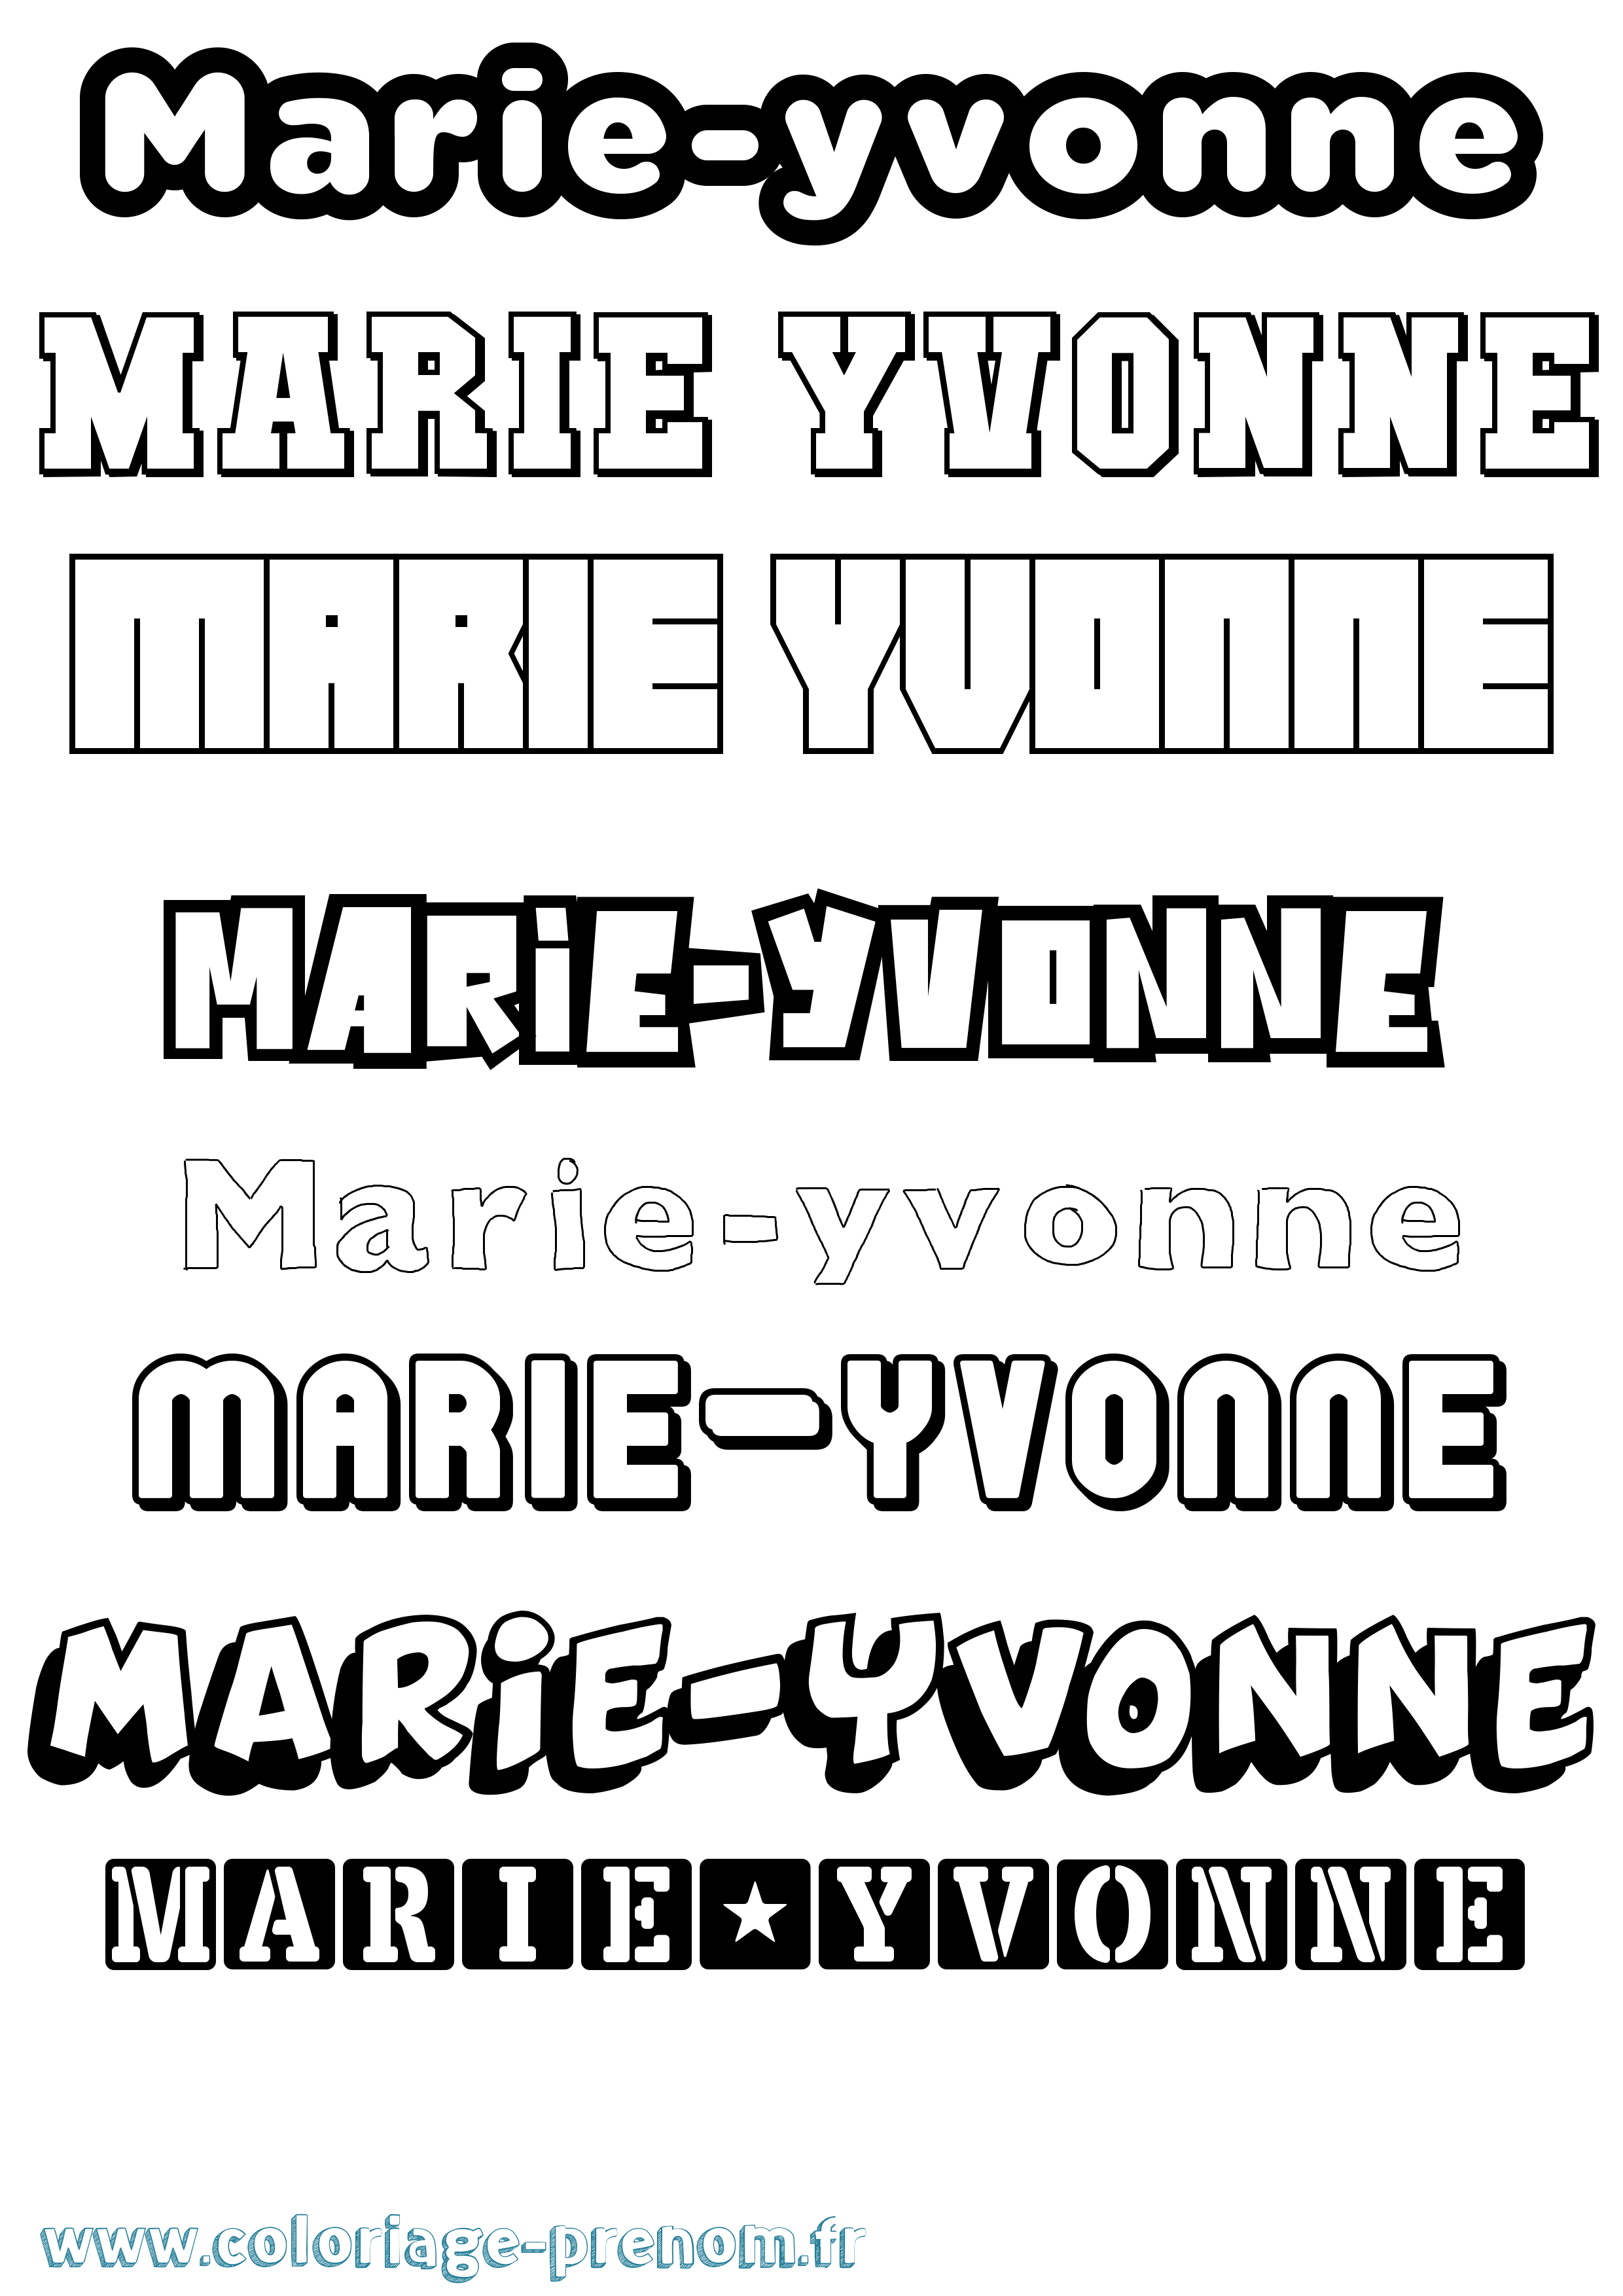 Coloriage prénom Marie-Yvonne Simple